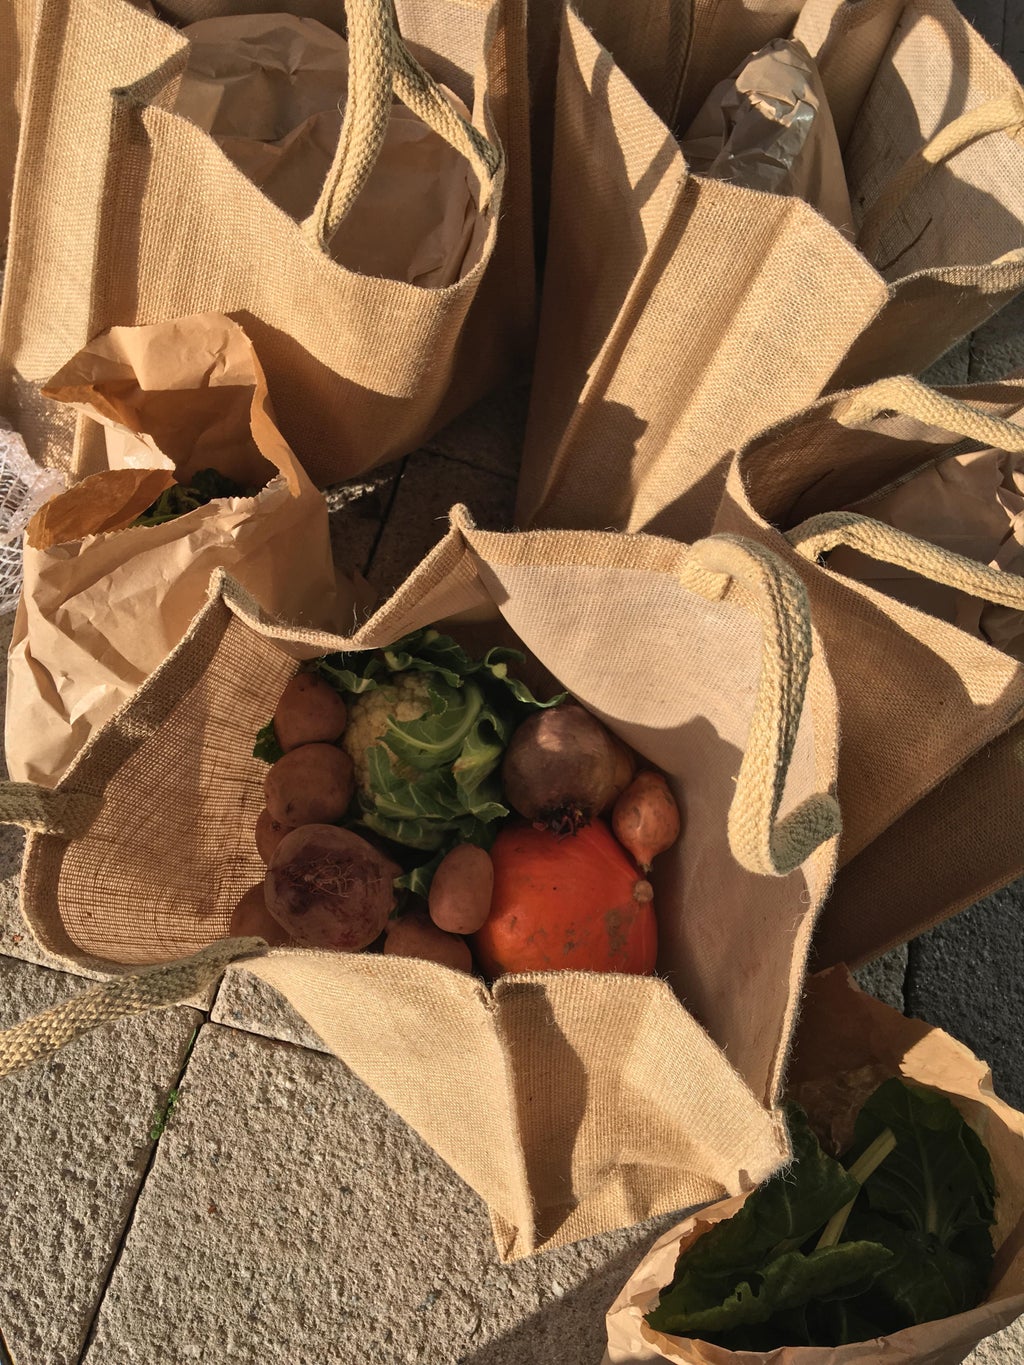 Bags of vegetables